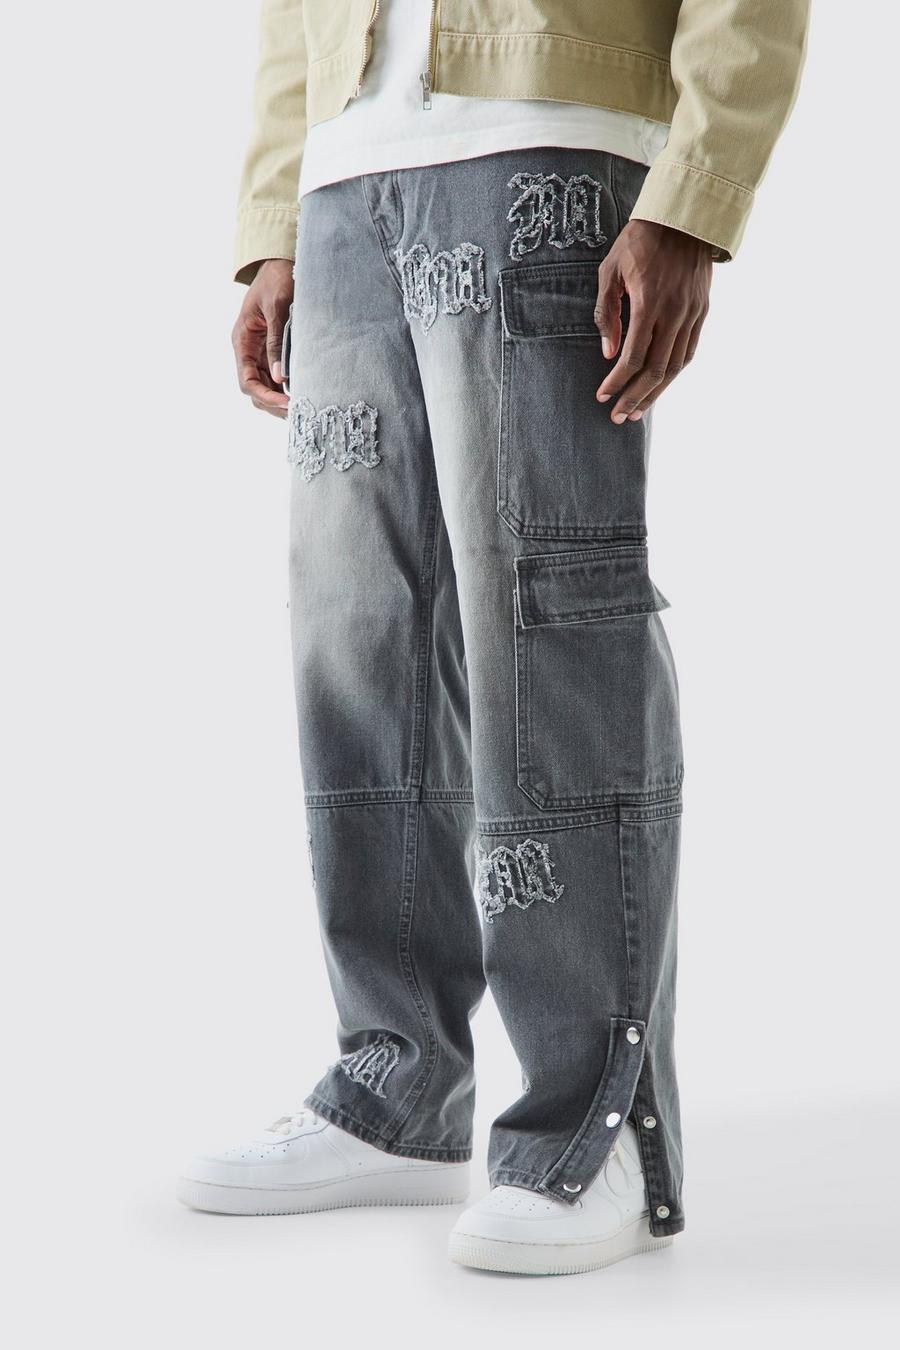 Jeans extra comodi grigi in denim rigido con applique BM e tasche Cargo, Grey